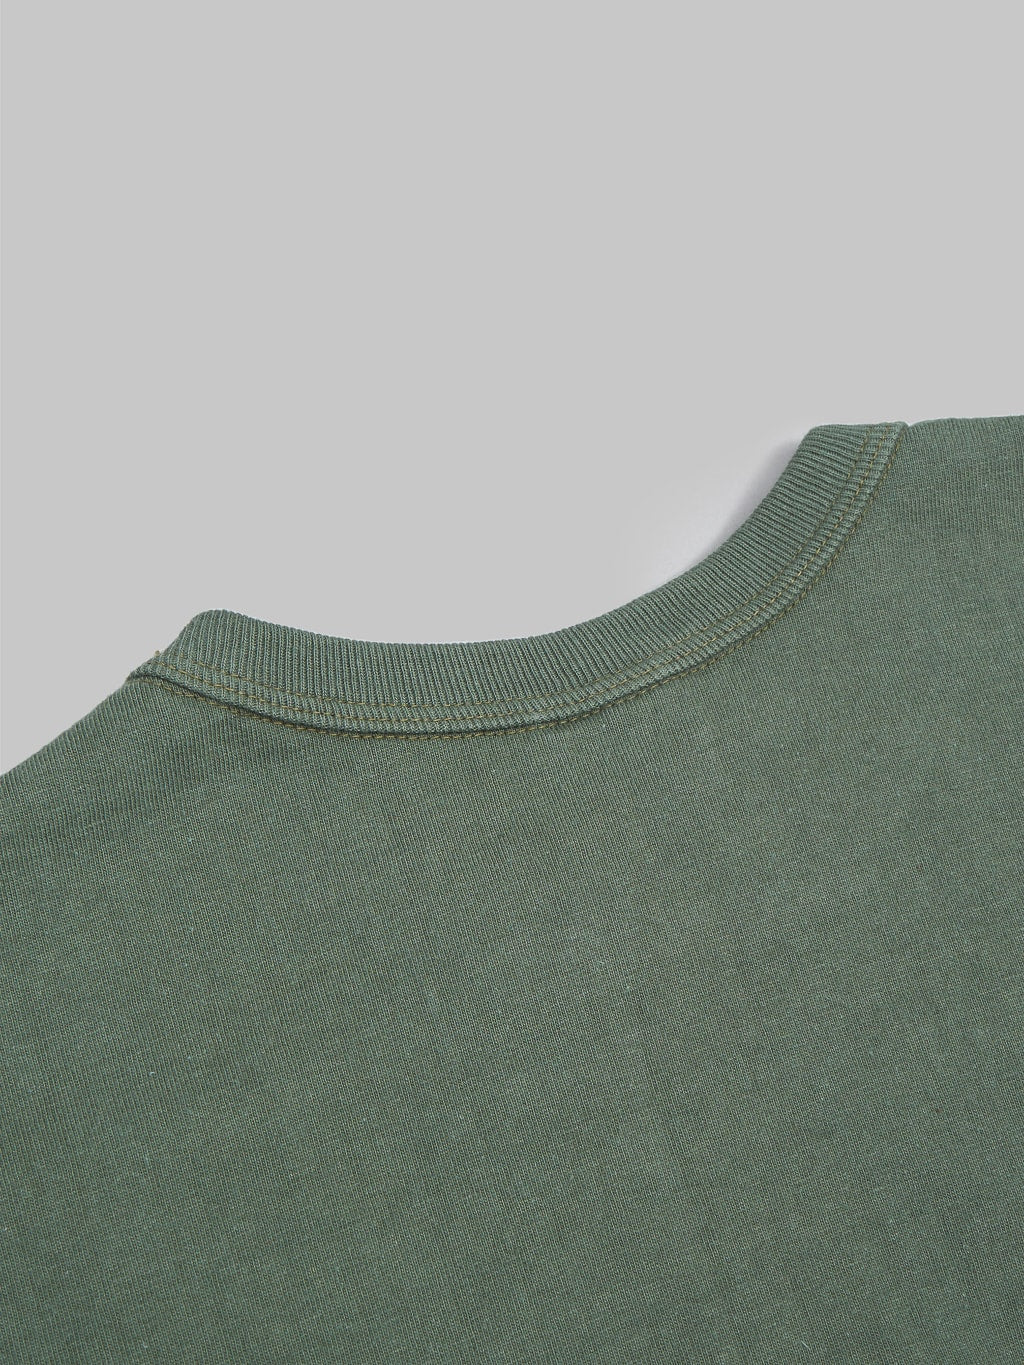 samurai jeans solid plain heavyweight tshirt moss green loopwheeled  back collar